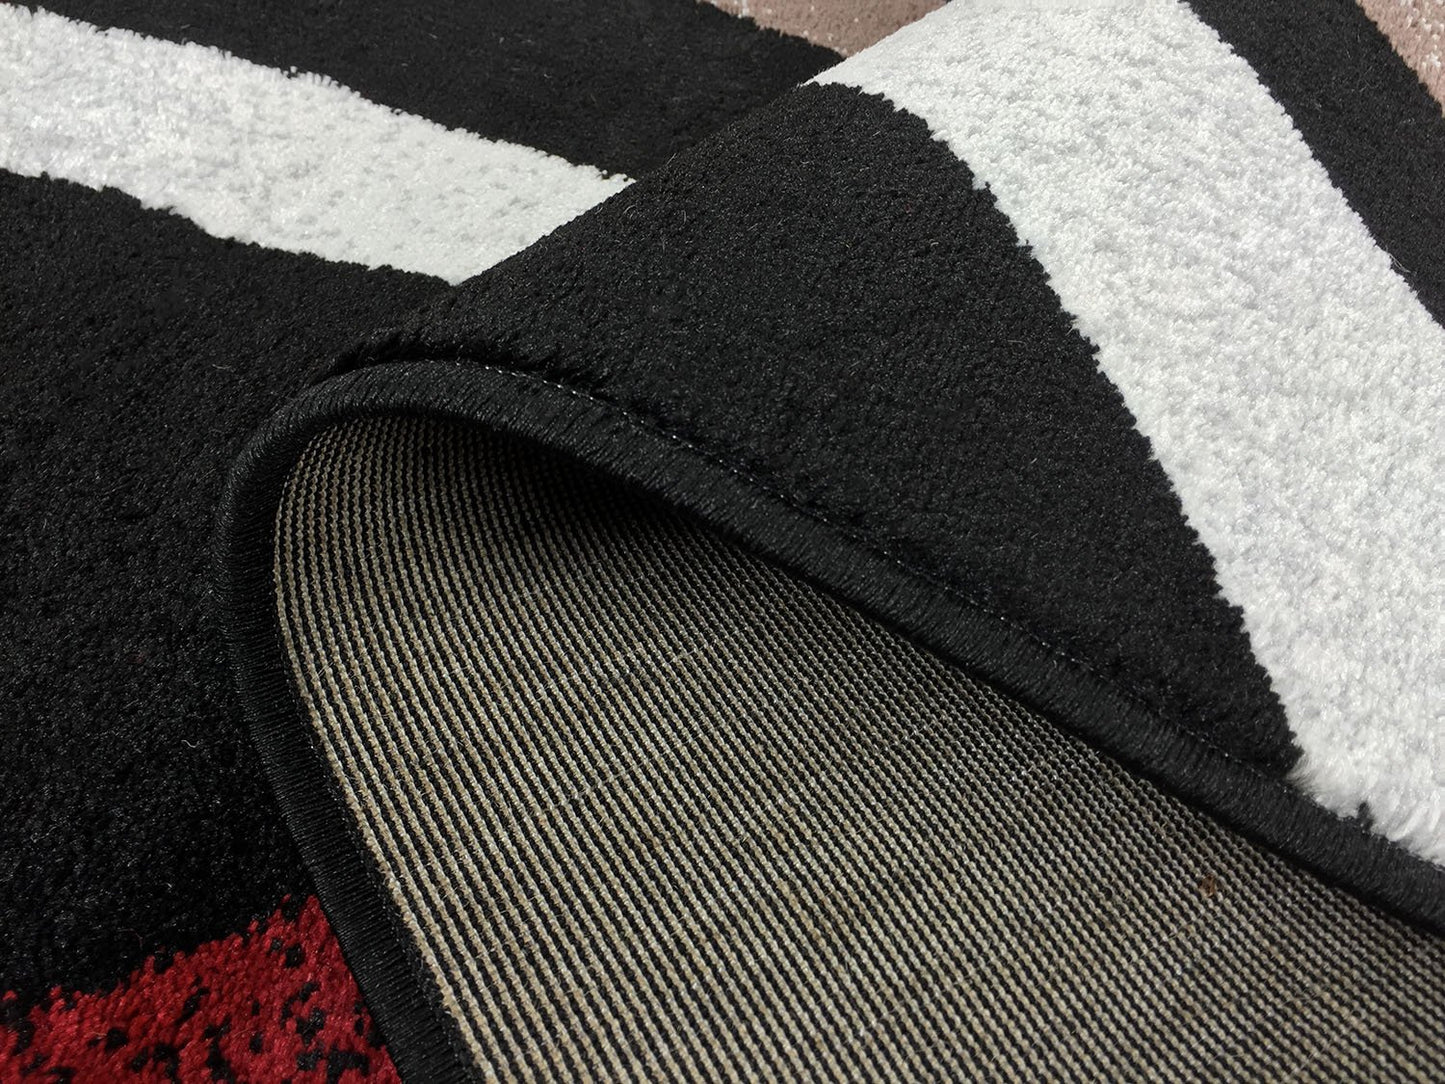 Comfy Collection Stripes Geometric Modern Area Rug (Black Grey, 4'11" x 6'11")